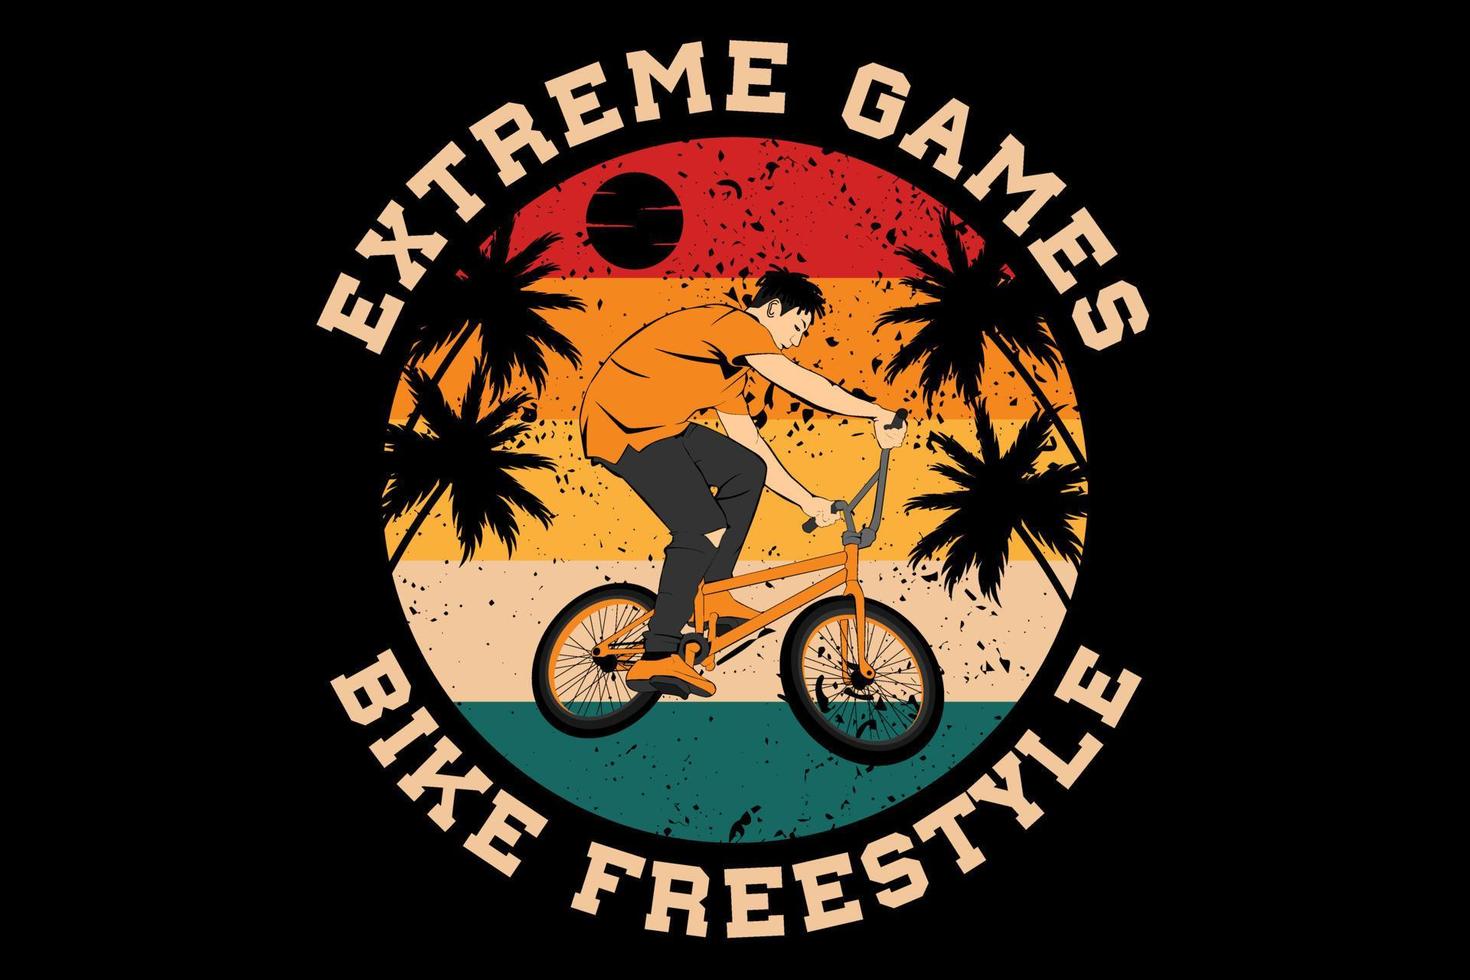 Extreme games bike freestyle design vintage retro vector